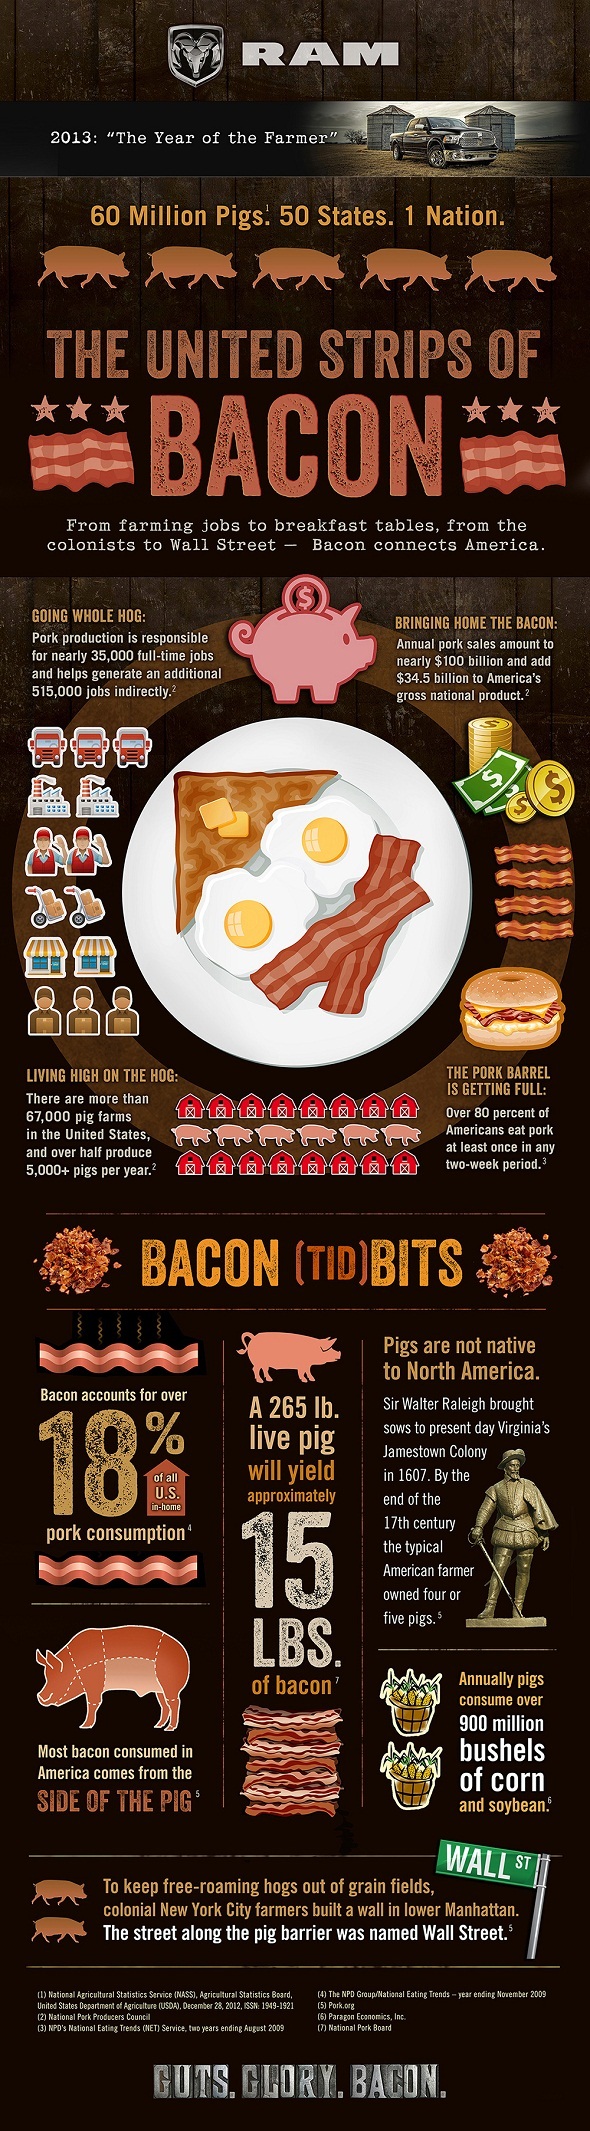 Ram-Trucks-United-Strips-of-Bacon-Infographic